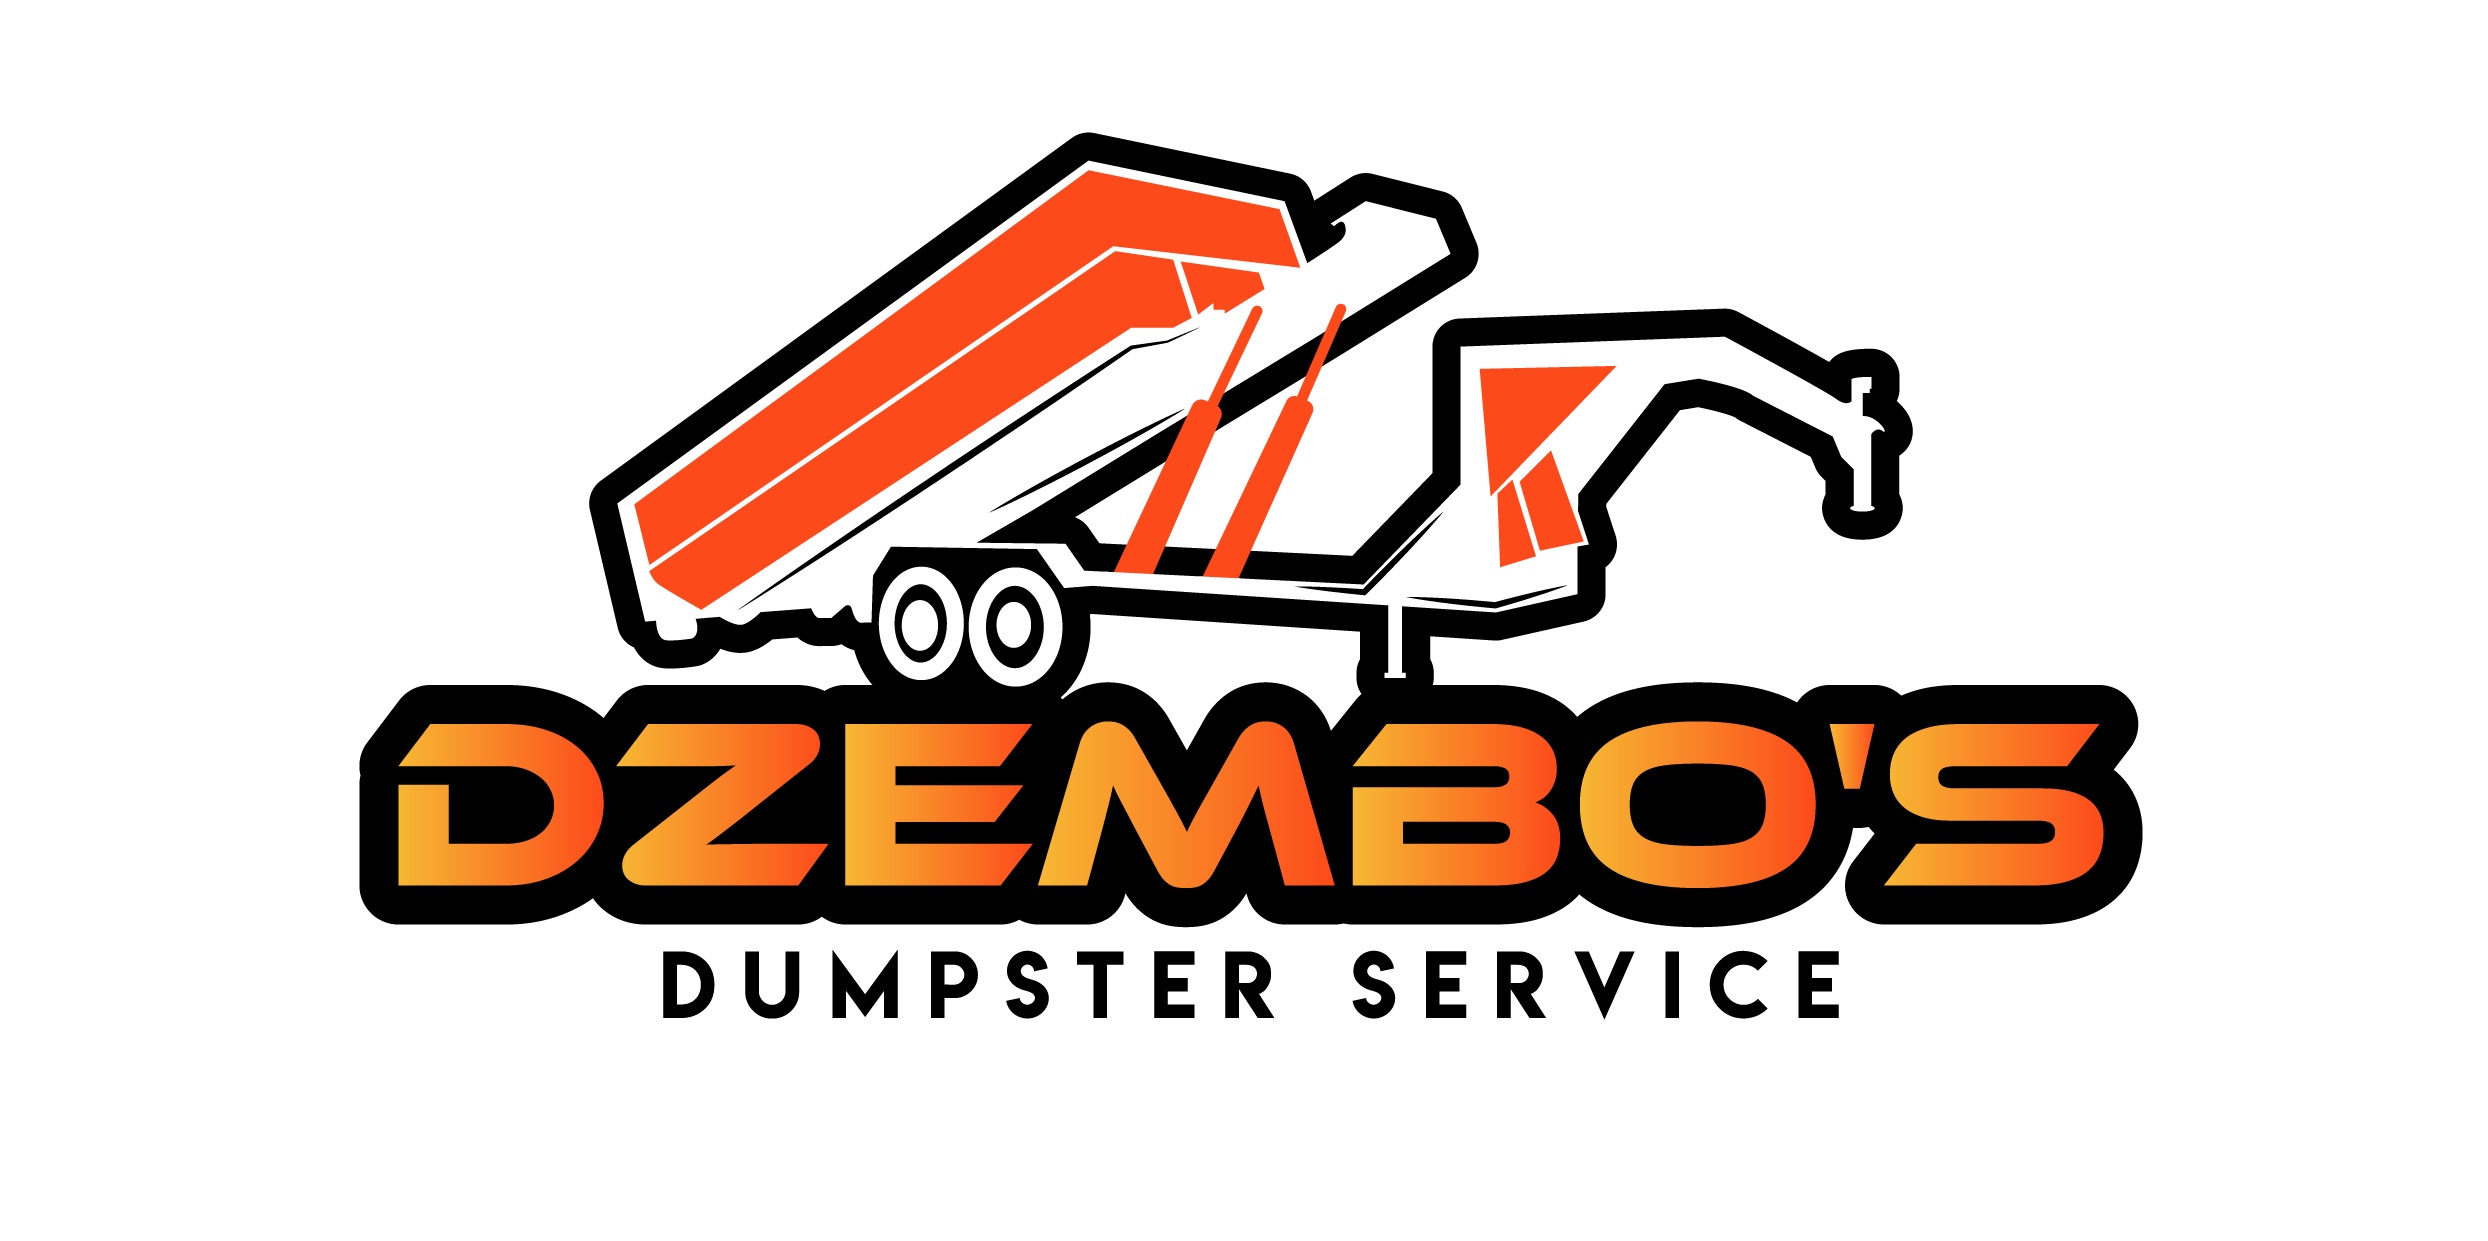 Dzembo's Dumpster Service Logo